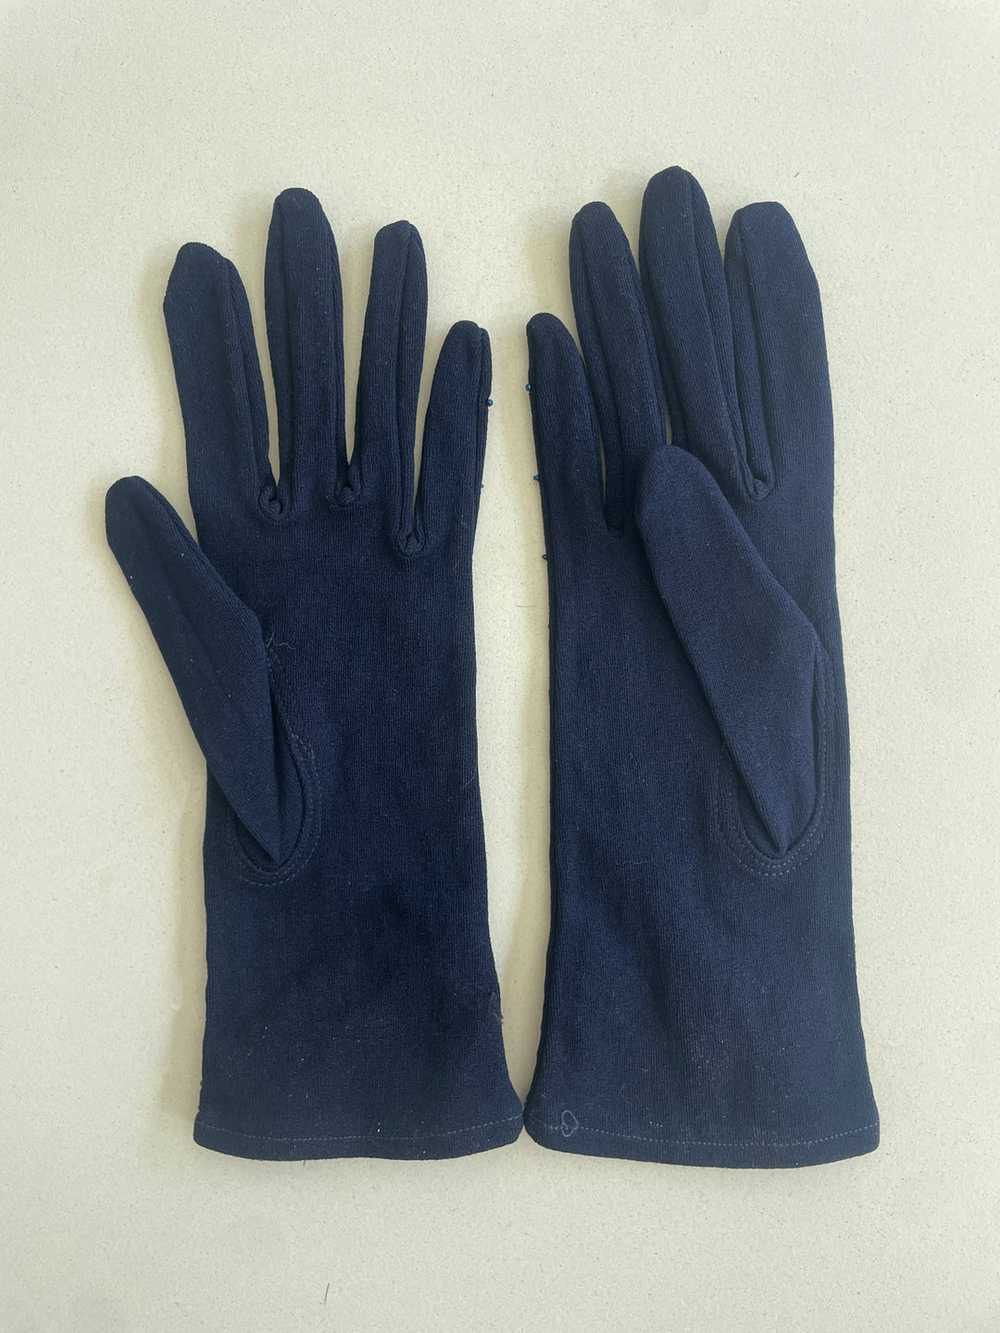 Vintage Beaded Gloves - image 4